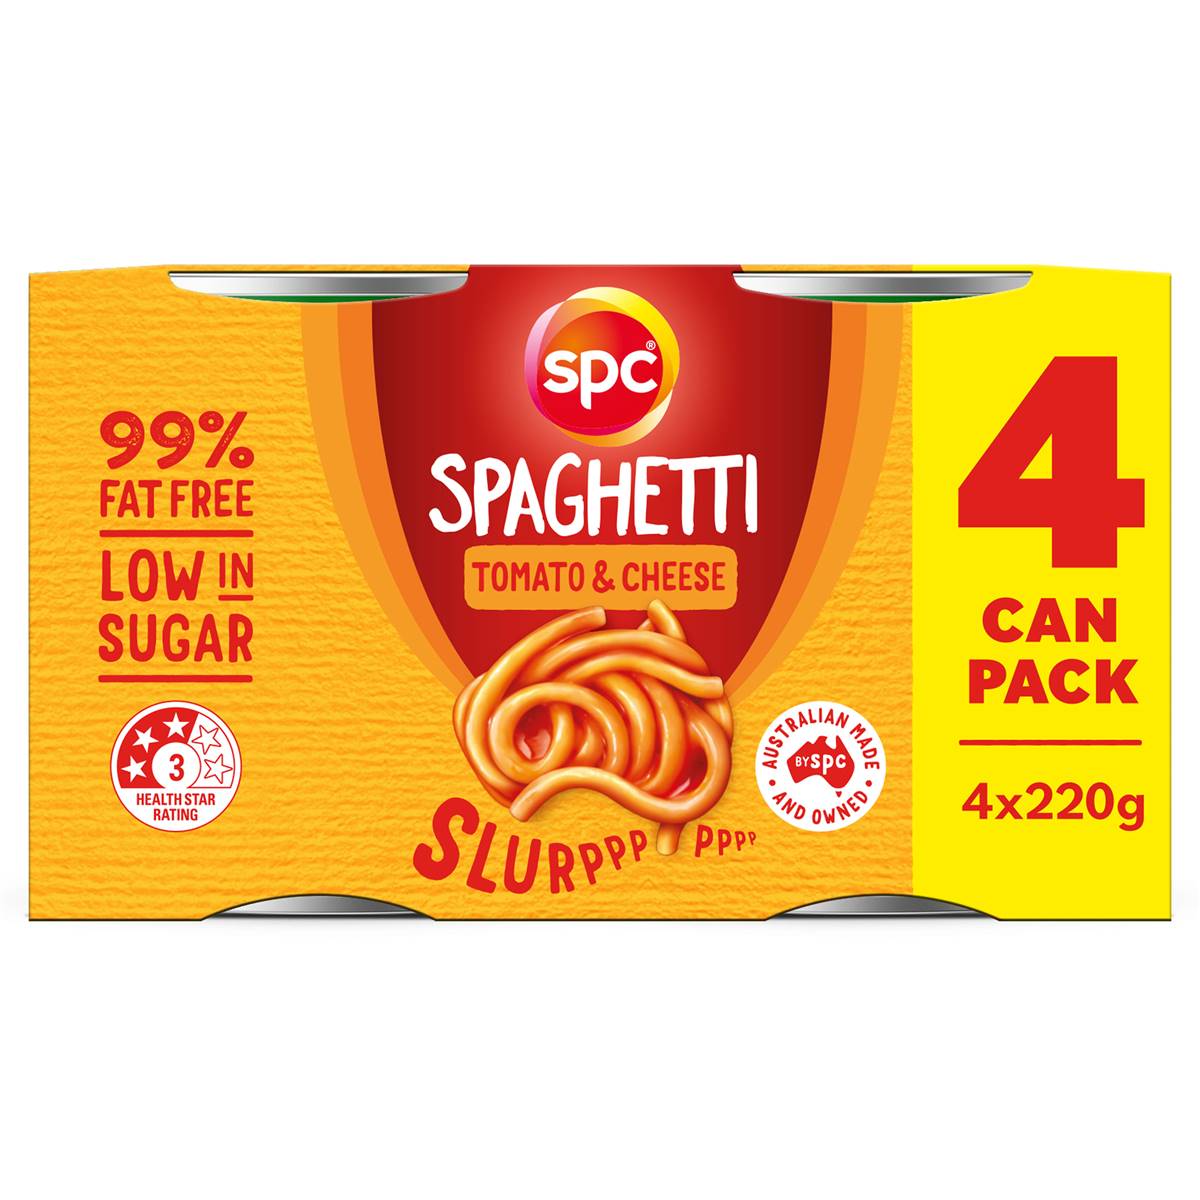 Calories in Spc Spaghetti Tomato & Cheese Tomato & Cheese Sauce